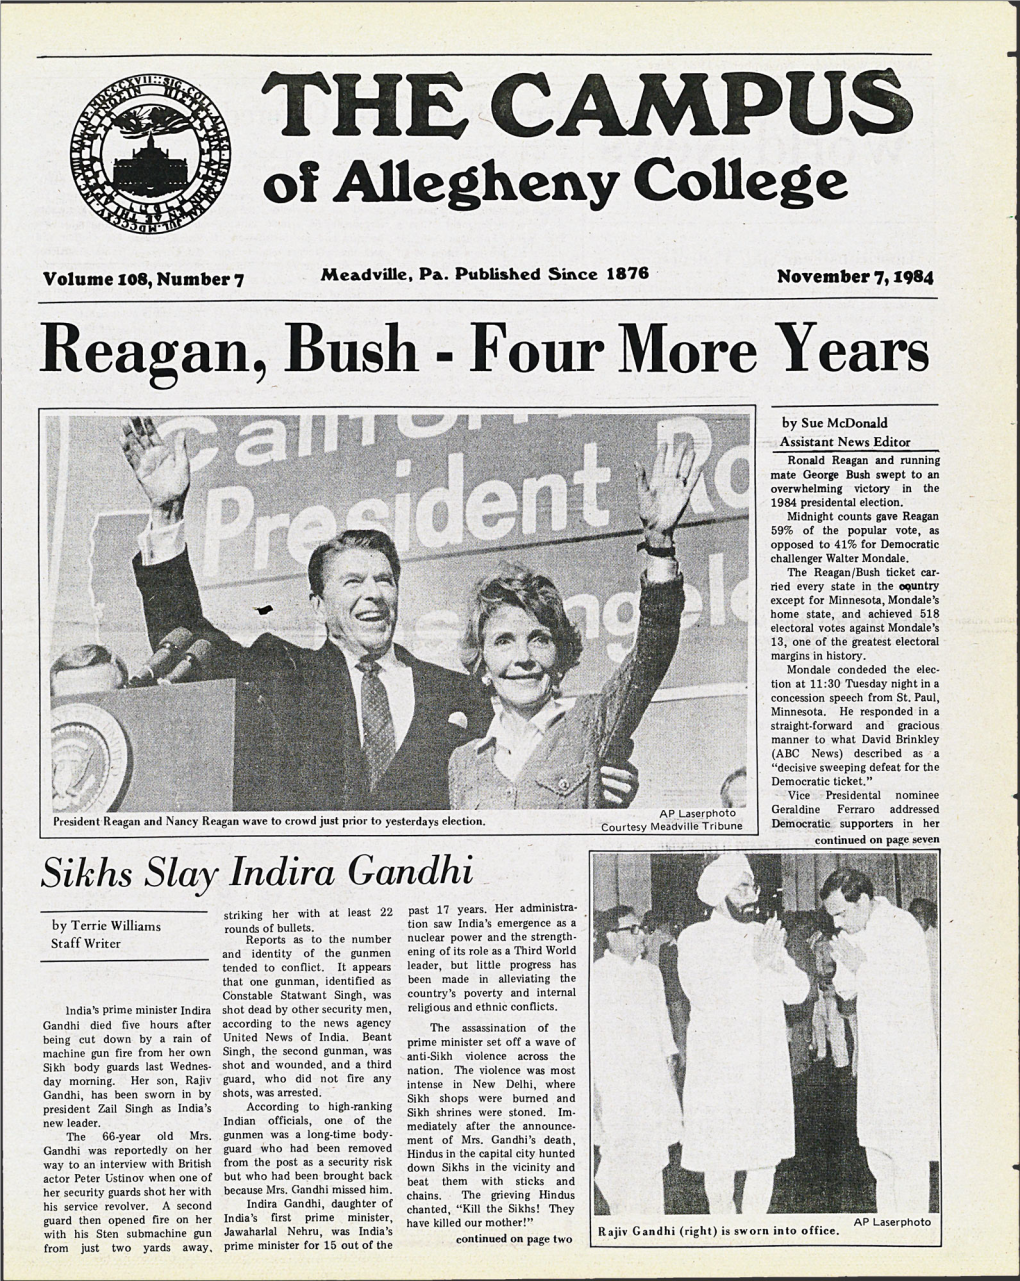 Reagan, Bush - Four More Years